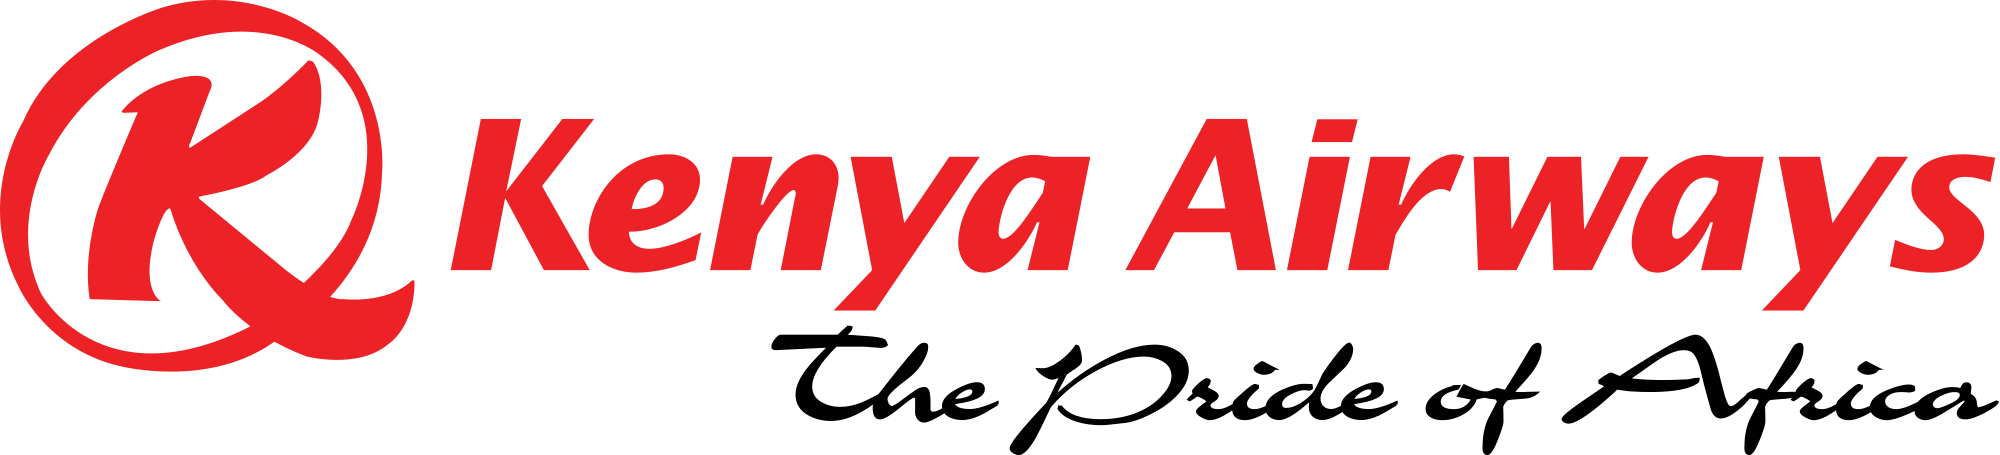 2000px-kenya_airways_logo.svg_